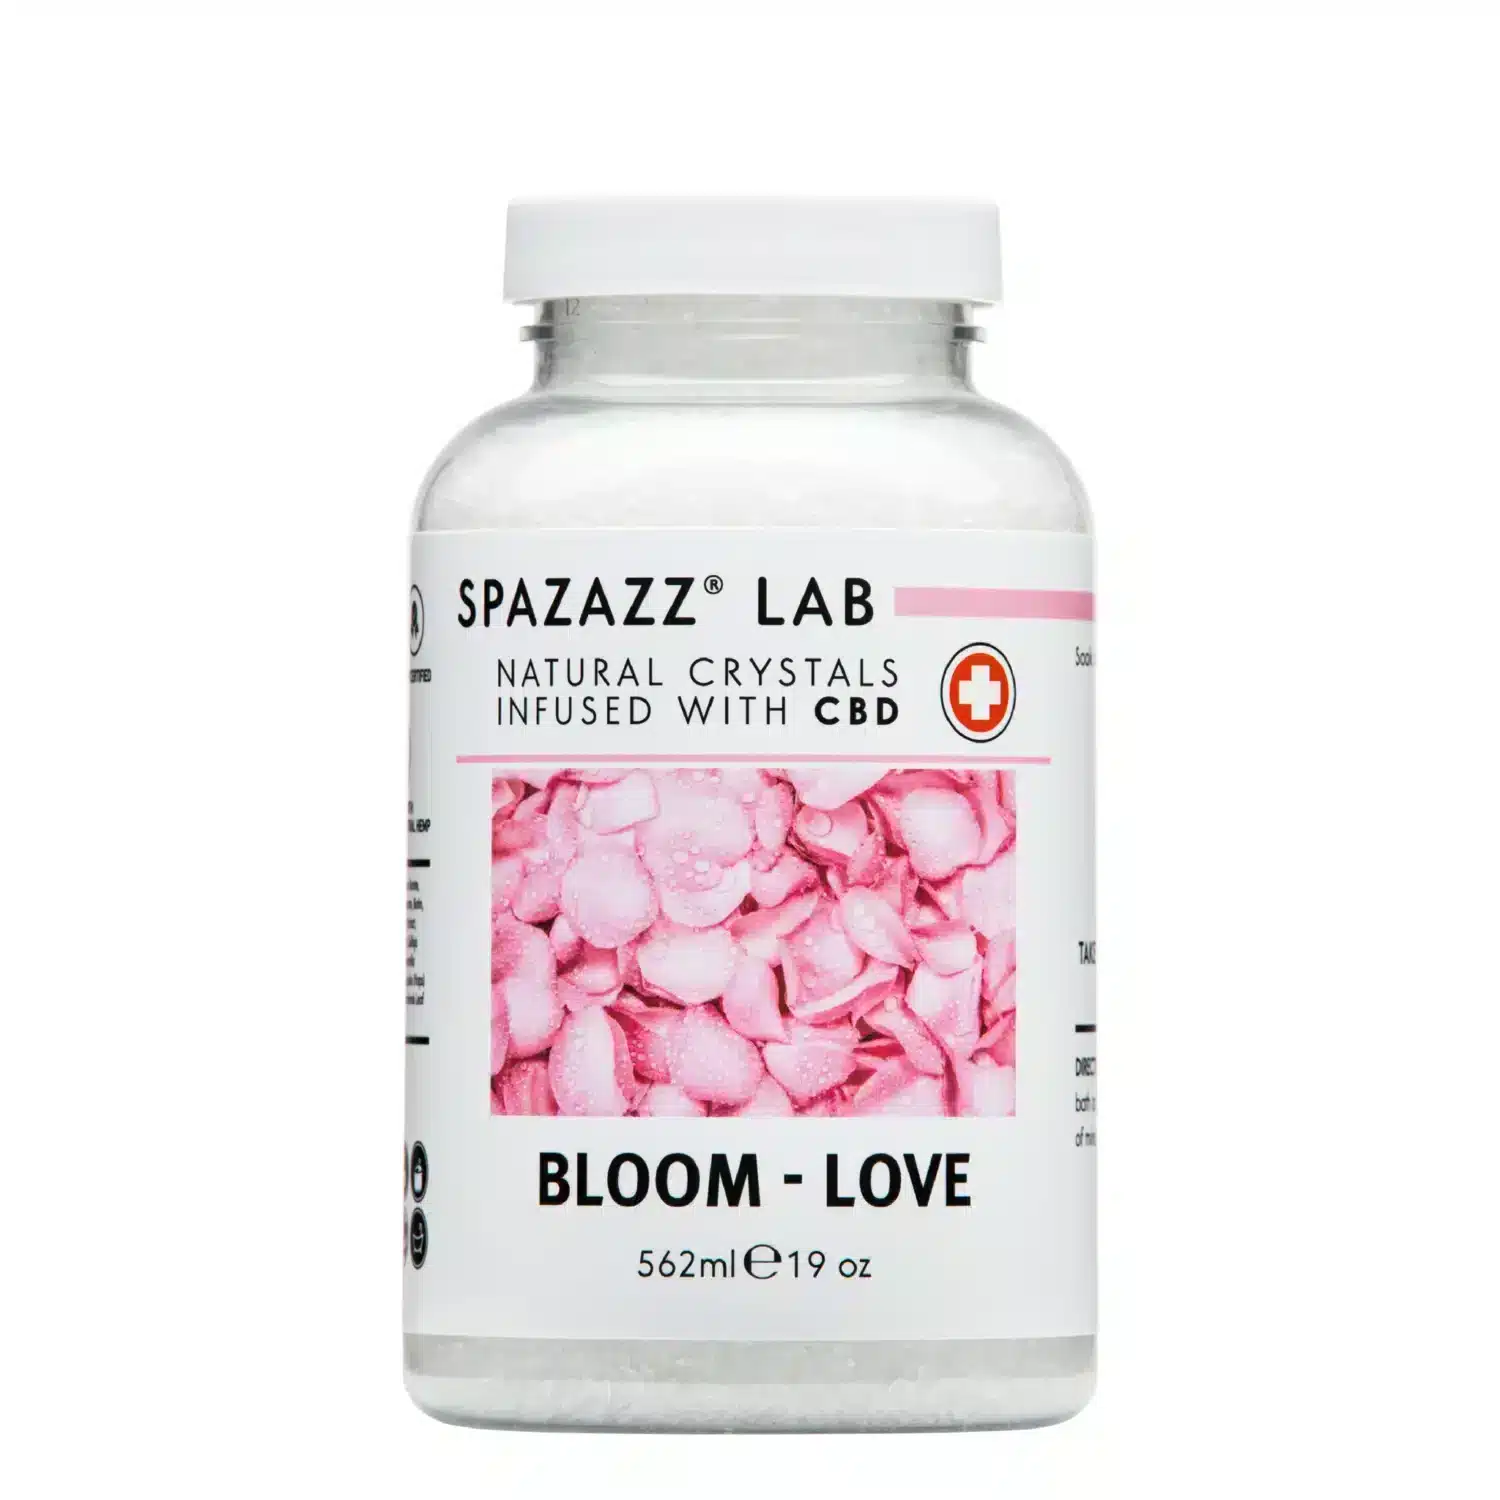 Spazazz Lab Natural Crystals CBD bloom-love Hot Tub Spa